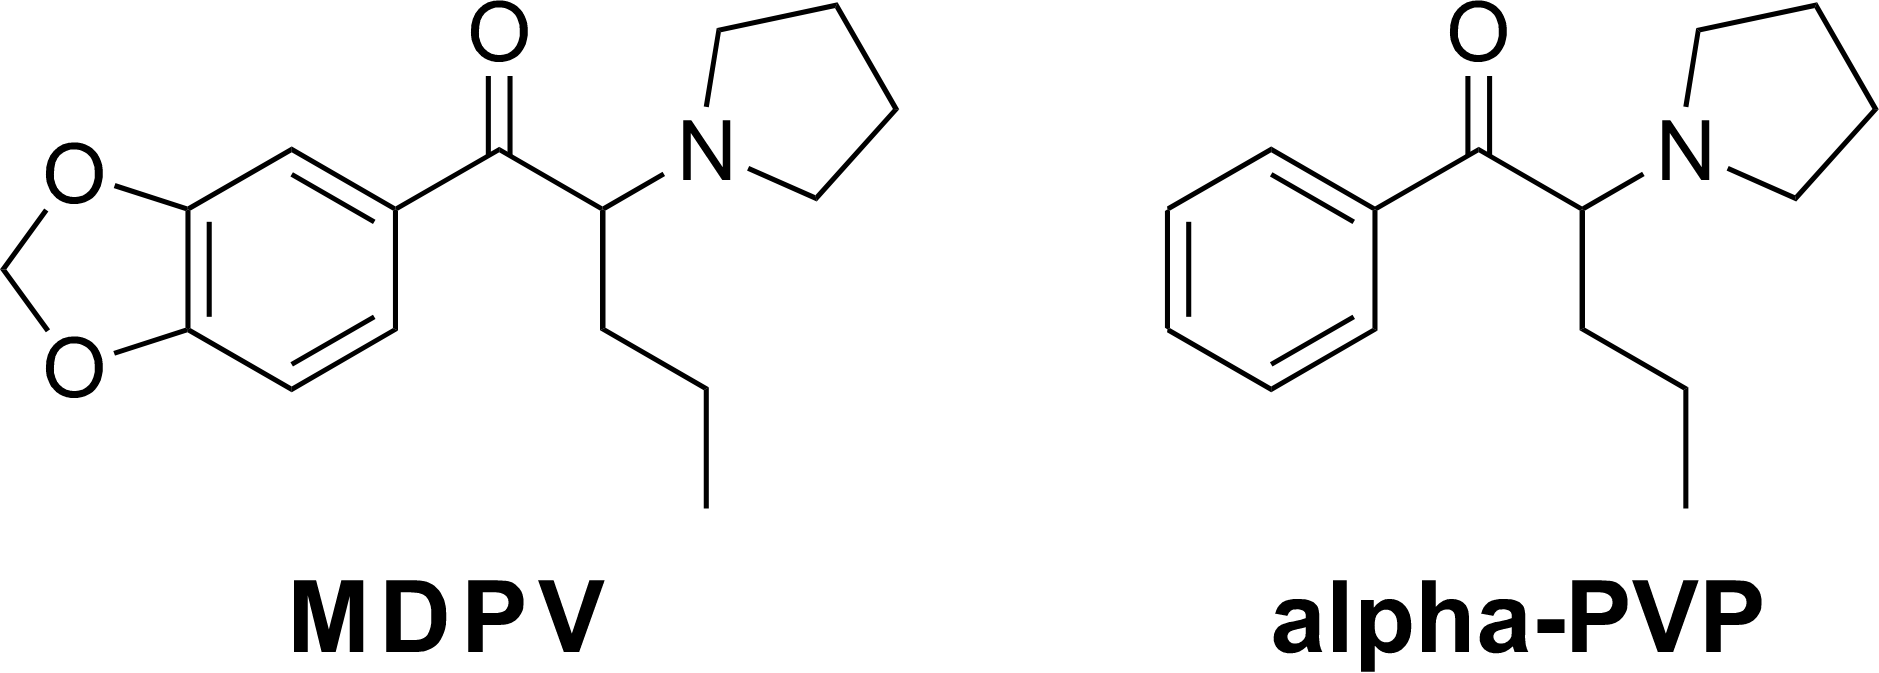 structure-pyrrolidine-mdpv-alphapvp.png